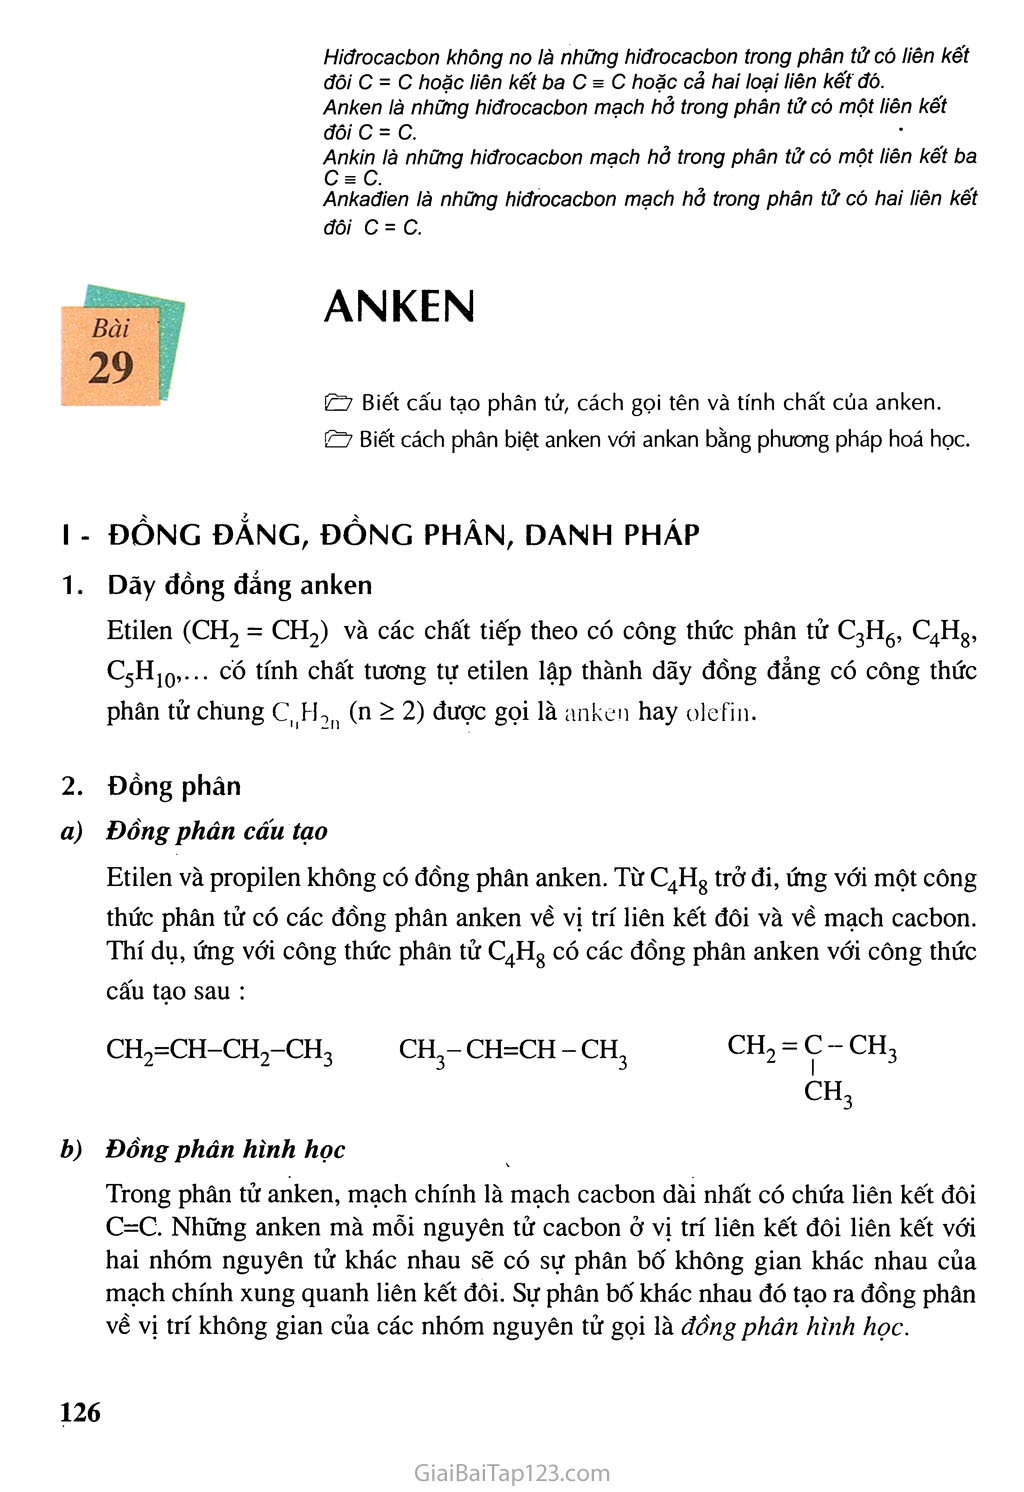 Bài 29: Anken trang 2